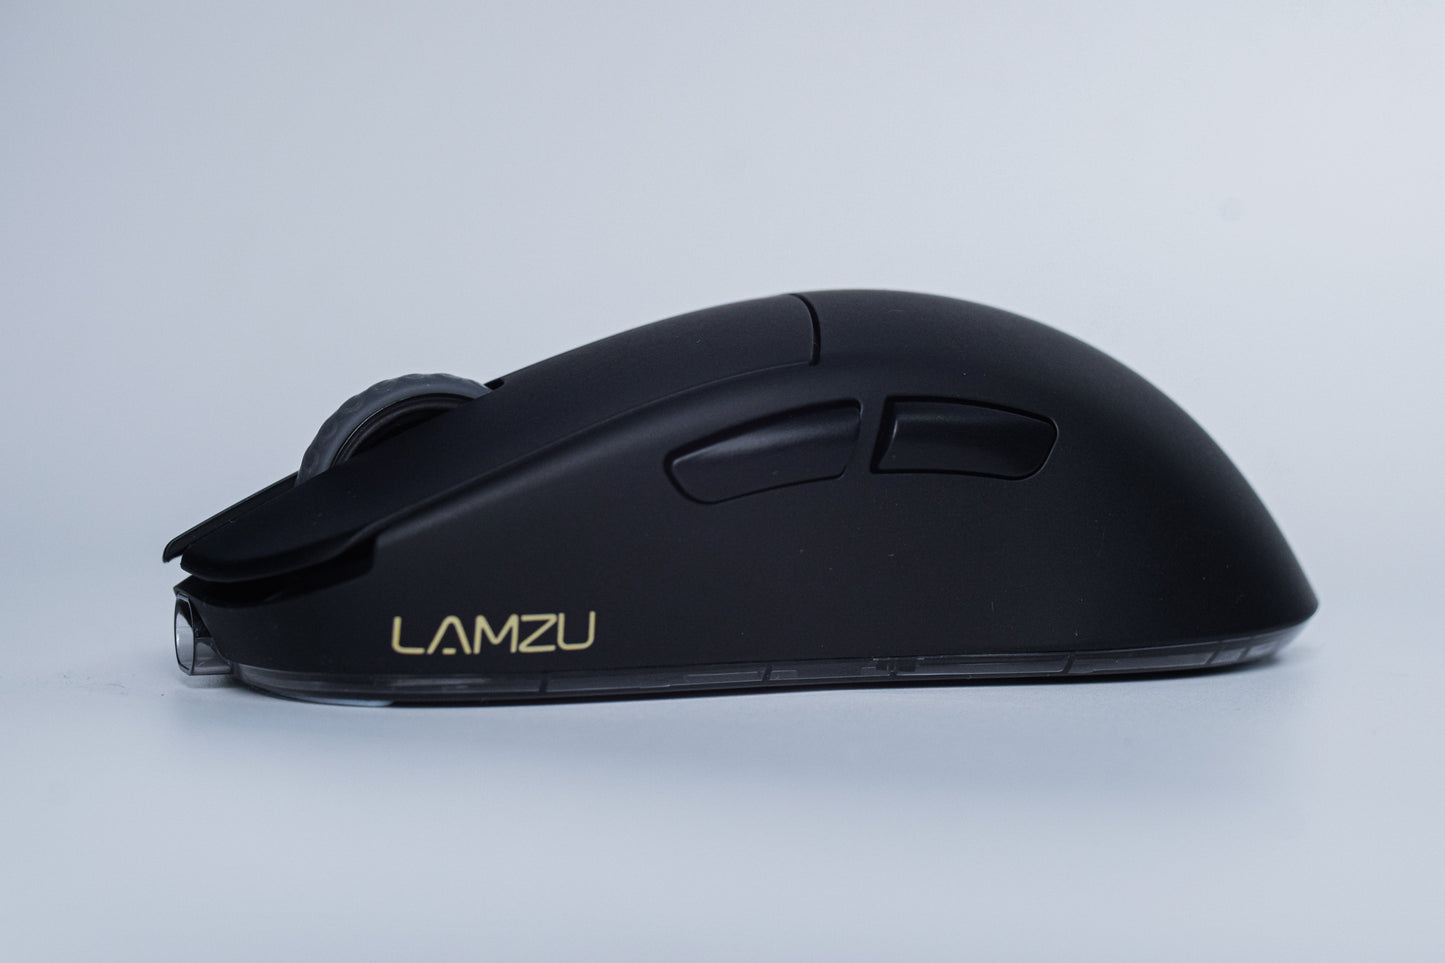 Lamzu Atlantis Mini Superlight Wireless Gaming Mouse